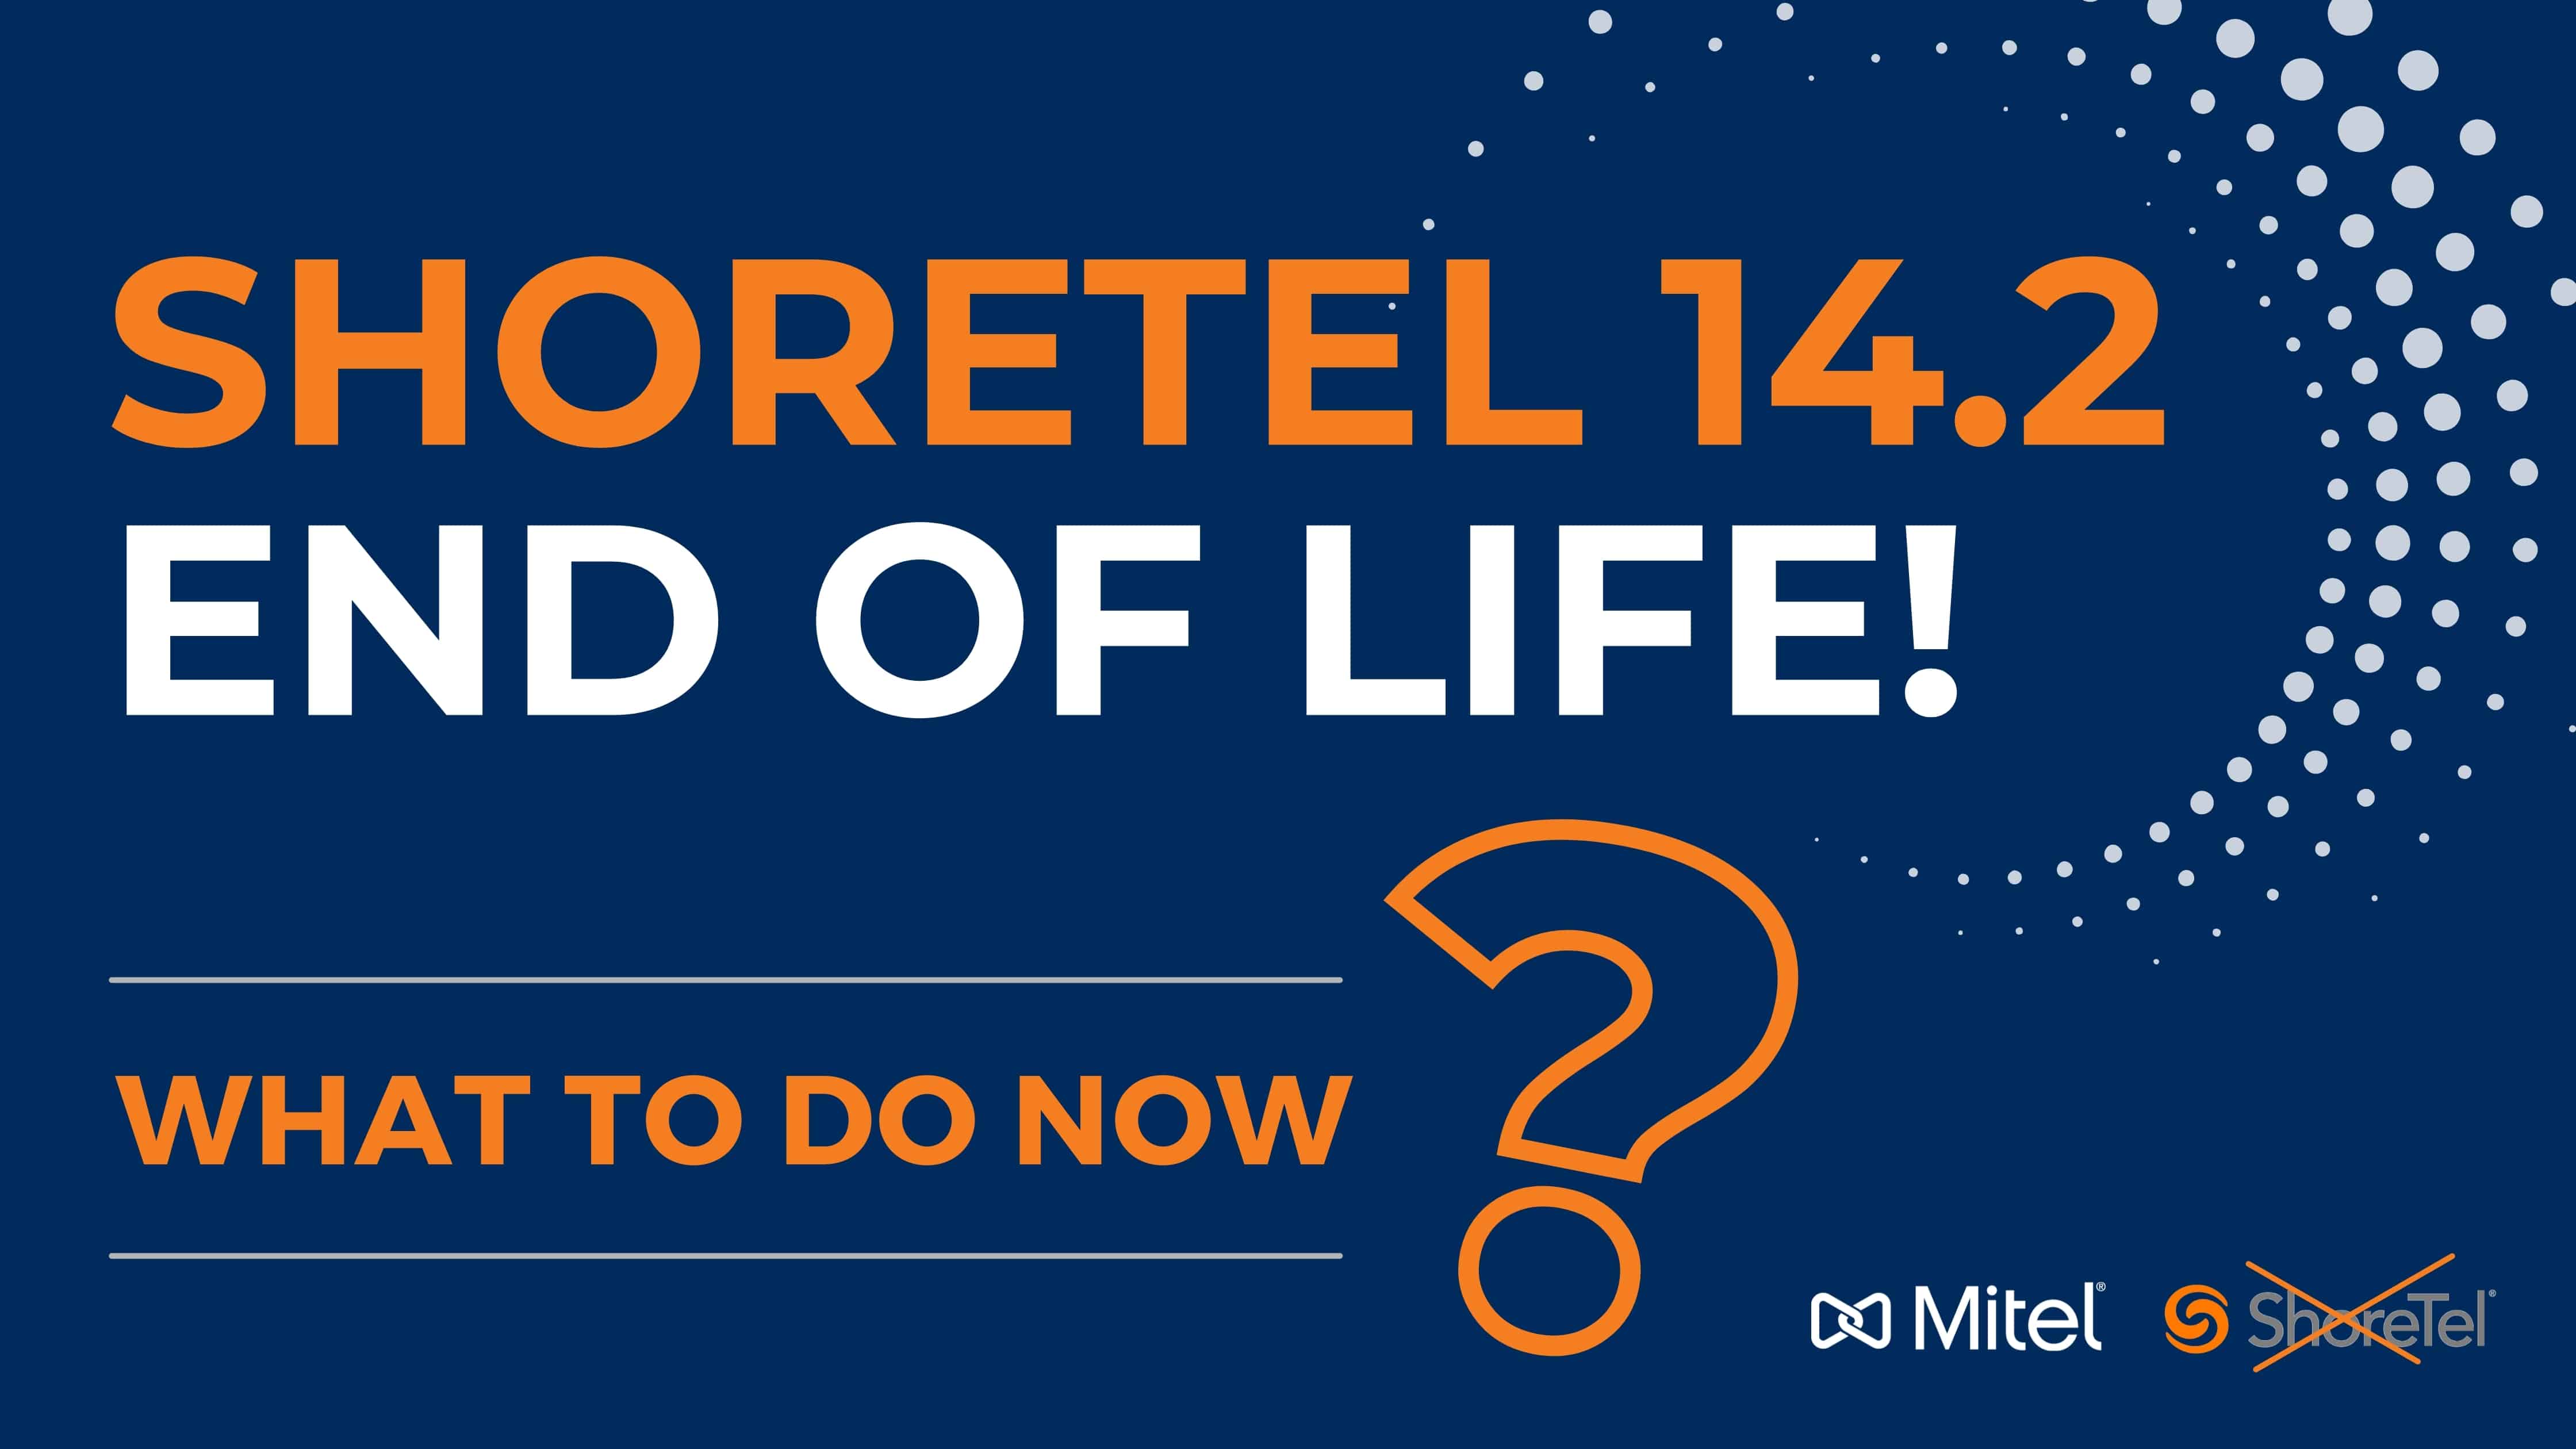 shoretel 14.2 end of life mitel products